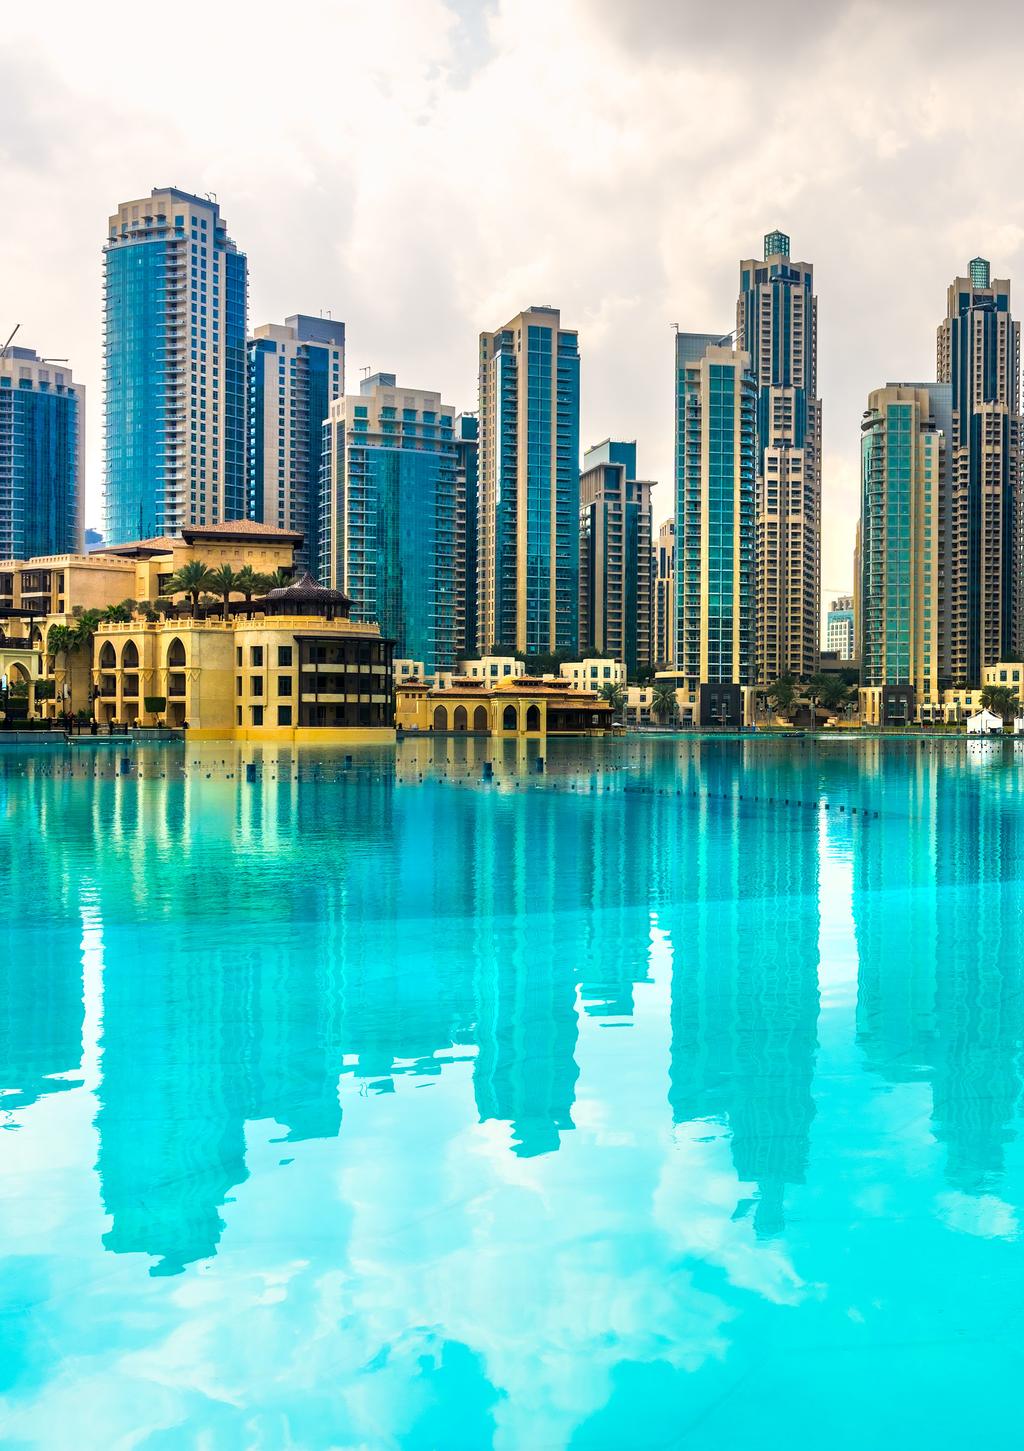 WESTIN DUBAI AL HABTOOR CITY HOTEL 7TH DECEMBER 2017 DUBAI, UAE INSURANCE & INVESTMENTS INNOVATIONS FORUM BE INNOVATIVE FOR A SUSTAINED LONG TERM SUCCESS 2017 SPEAKERS Sanjay Jain MENA Insurance